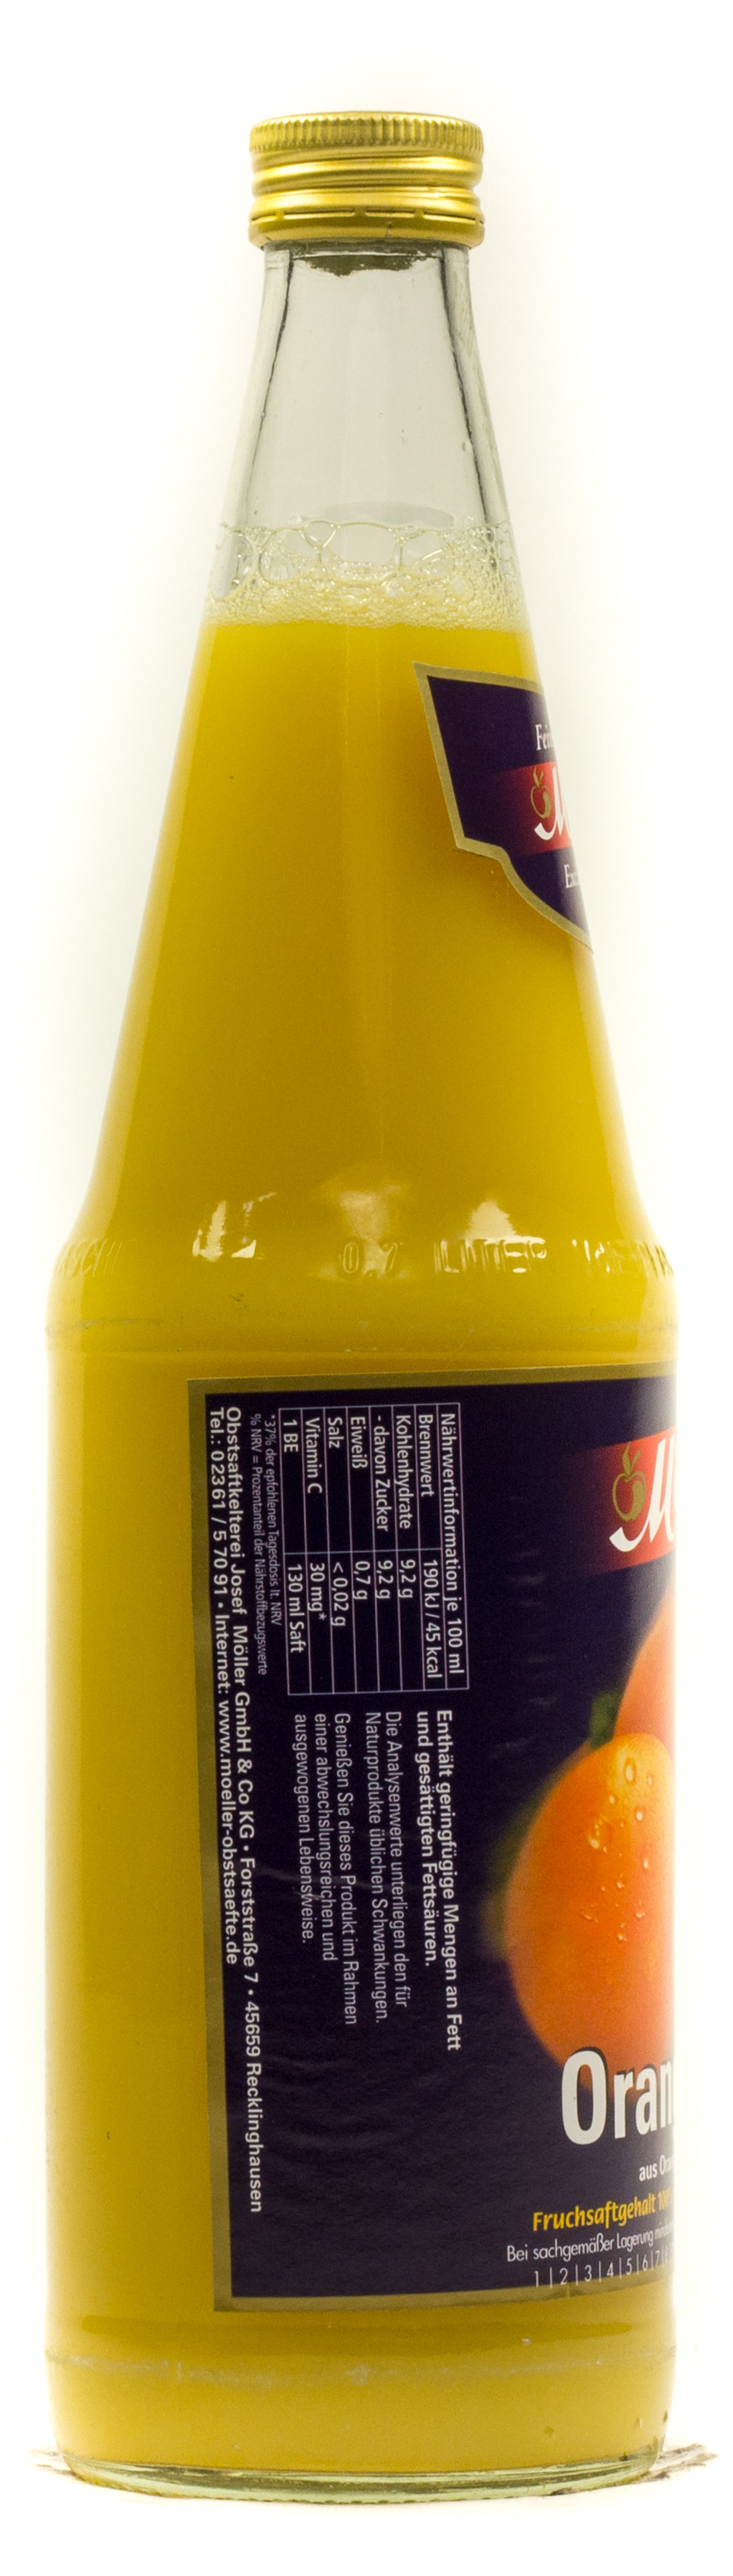 Möller Orangensaft Kasten 12 x 0,7 l Glas Mehrweg